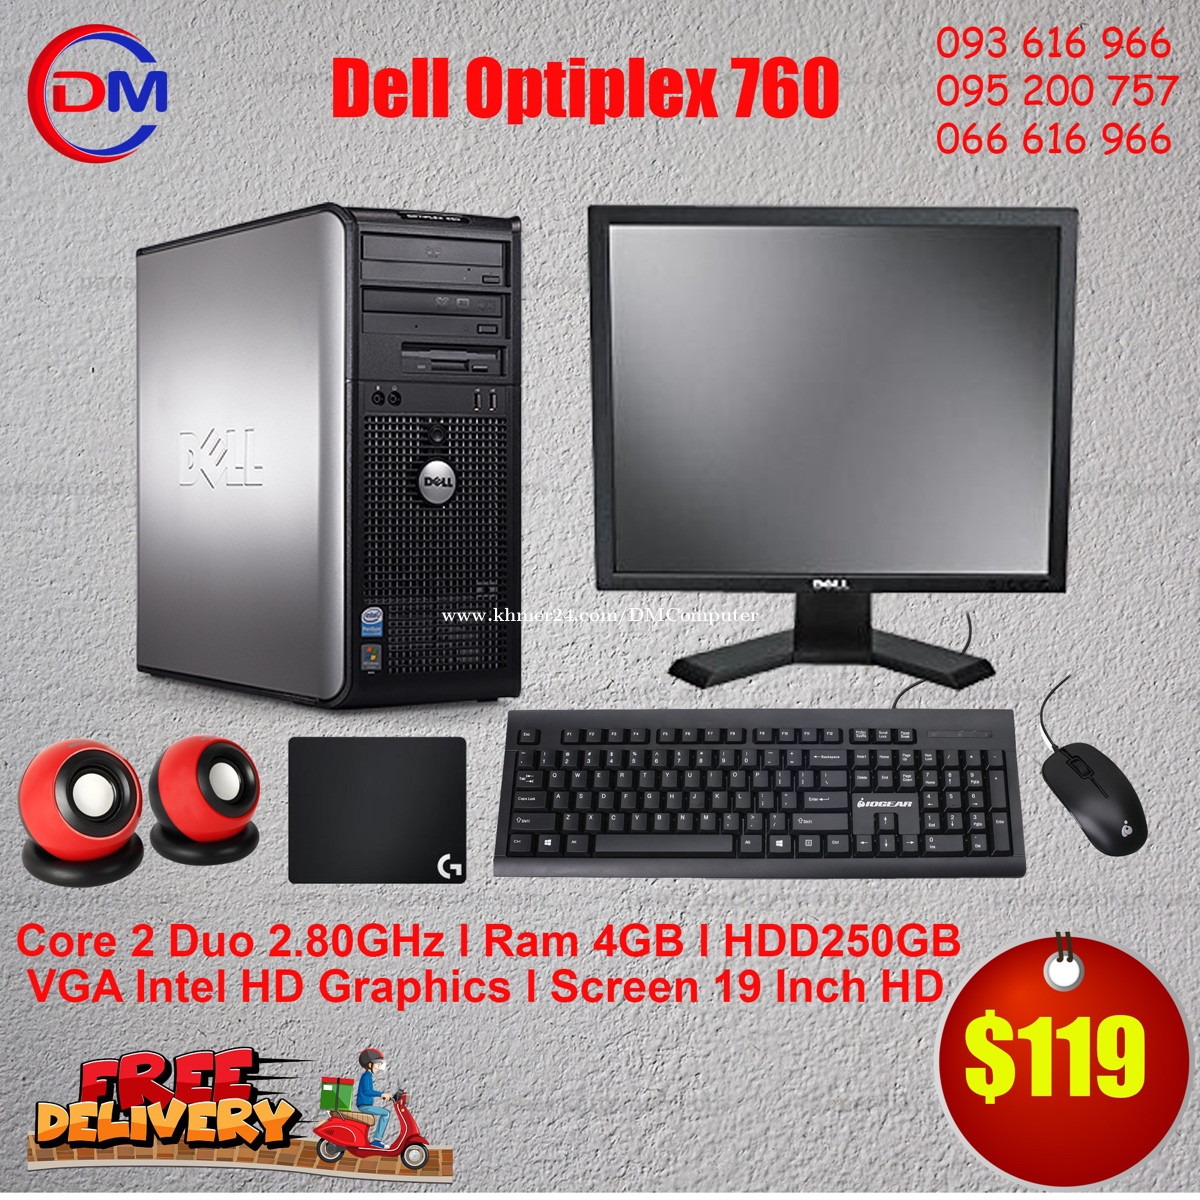 Desktop Dell Price $119 in Phnom Penh, Cambodia - DM Computer 